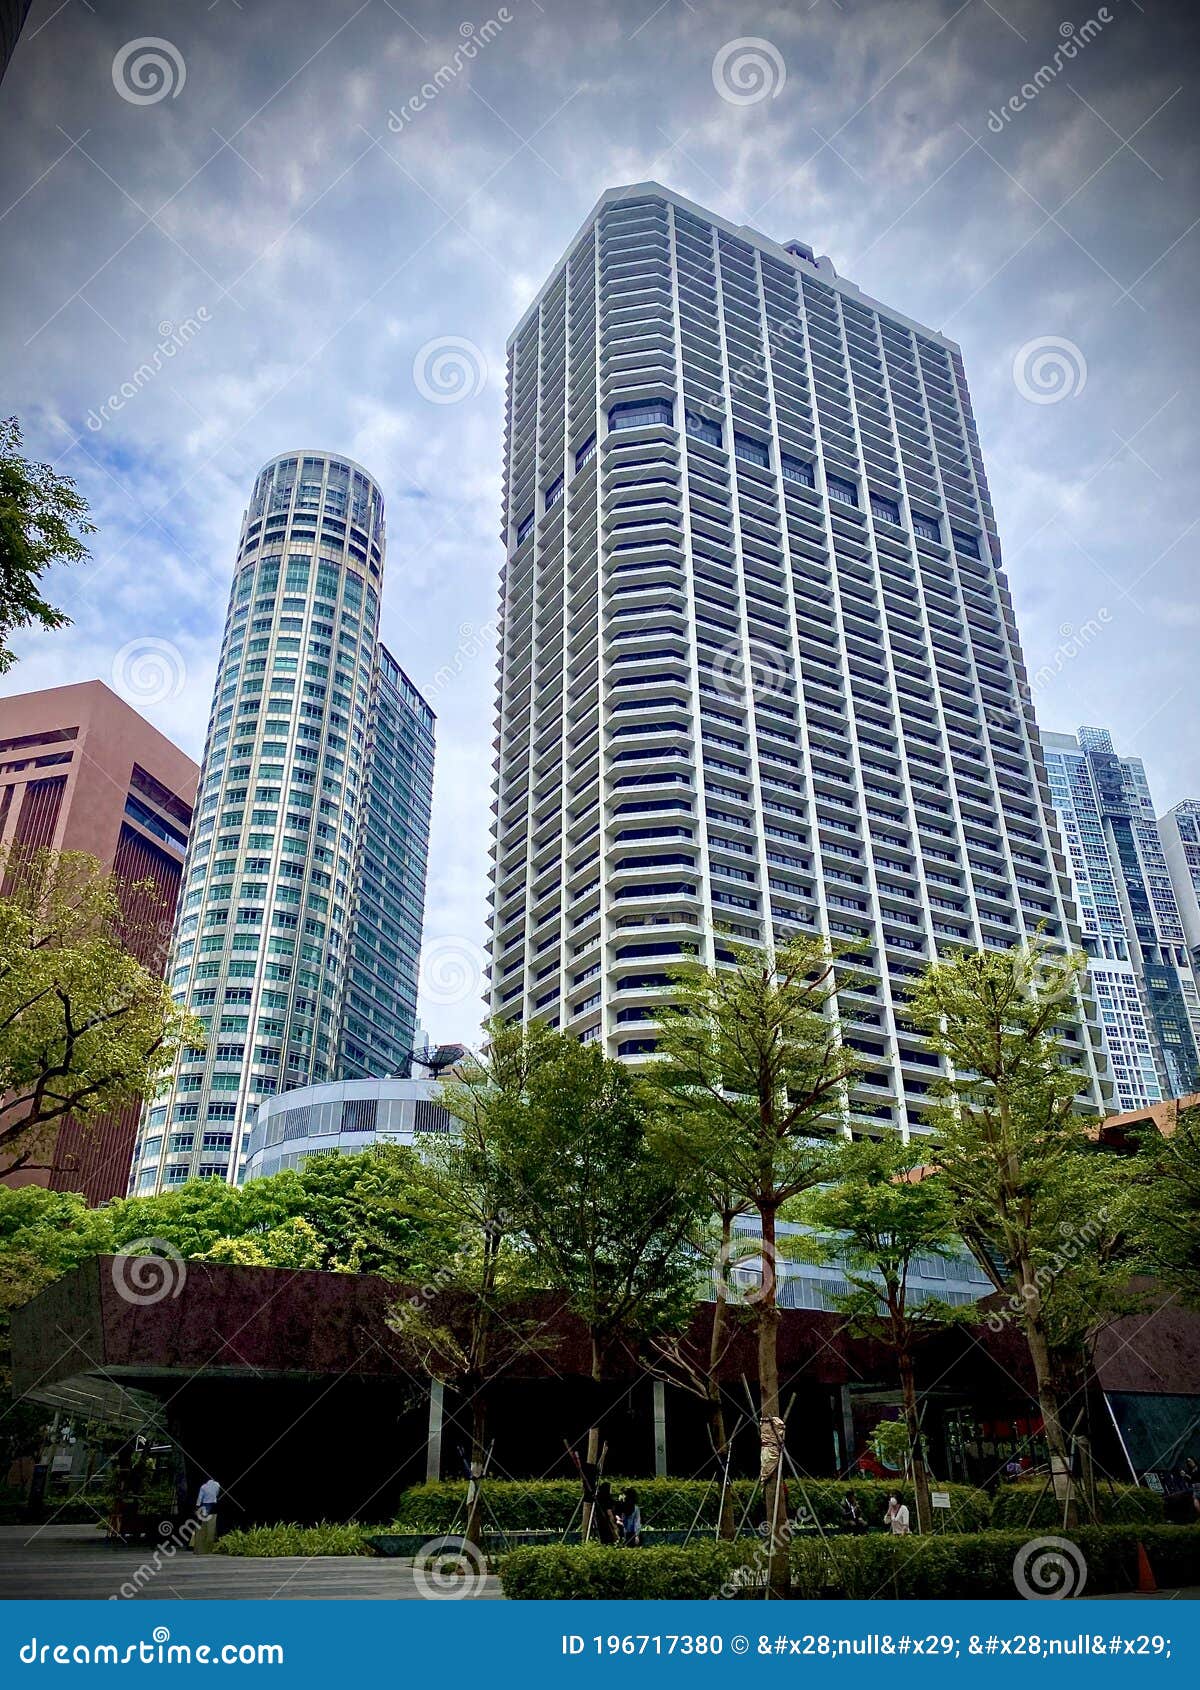 architecture- business tower, fisheye lens effect. tanjong pagar, international plaza, singapore. 15. september 2020.